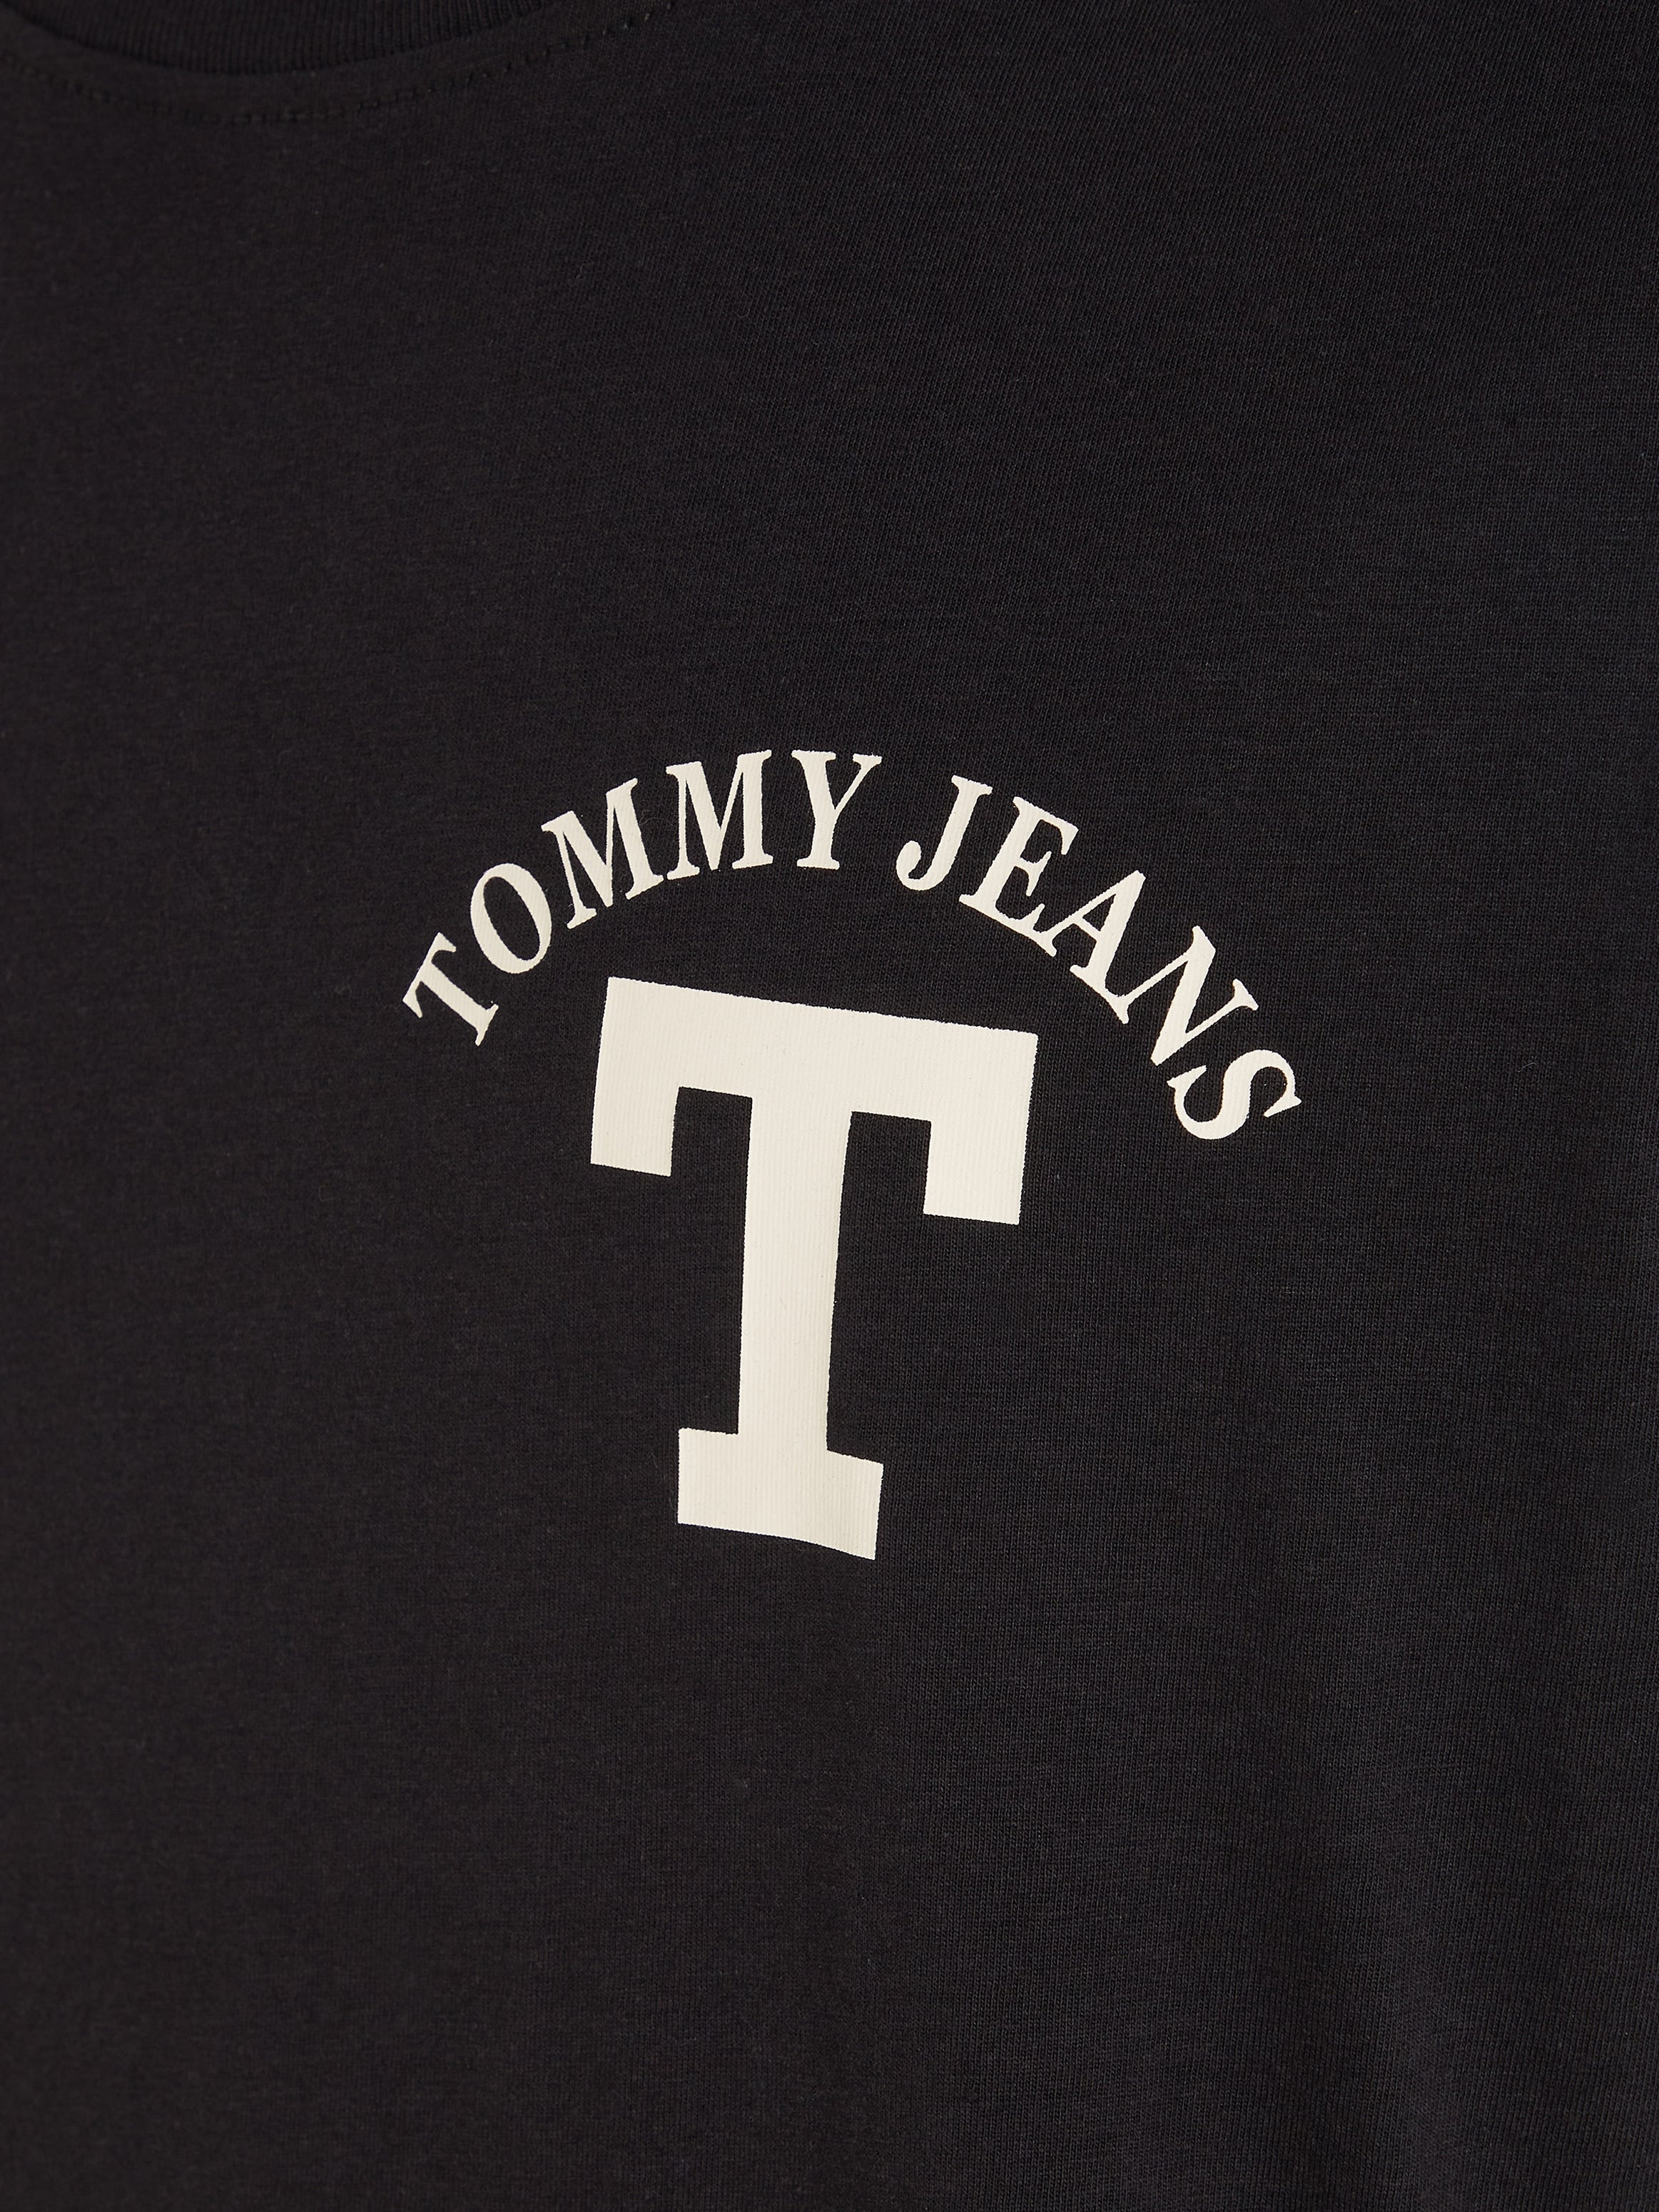 for Curved Letterman Galvin Jeans - Black Tommy - Men T-Shirt